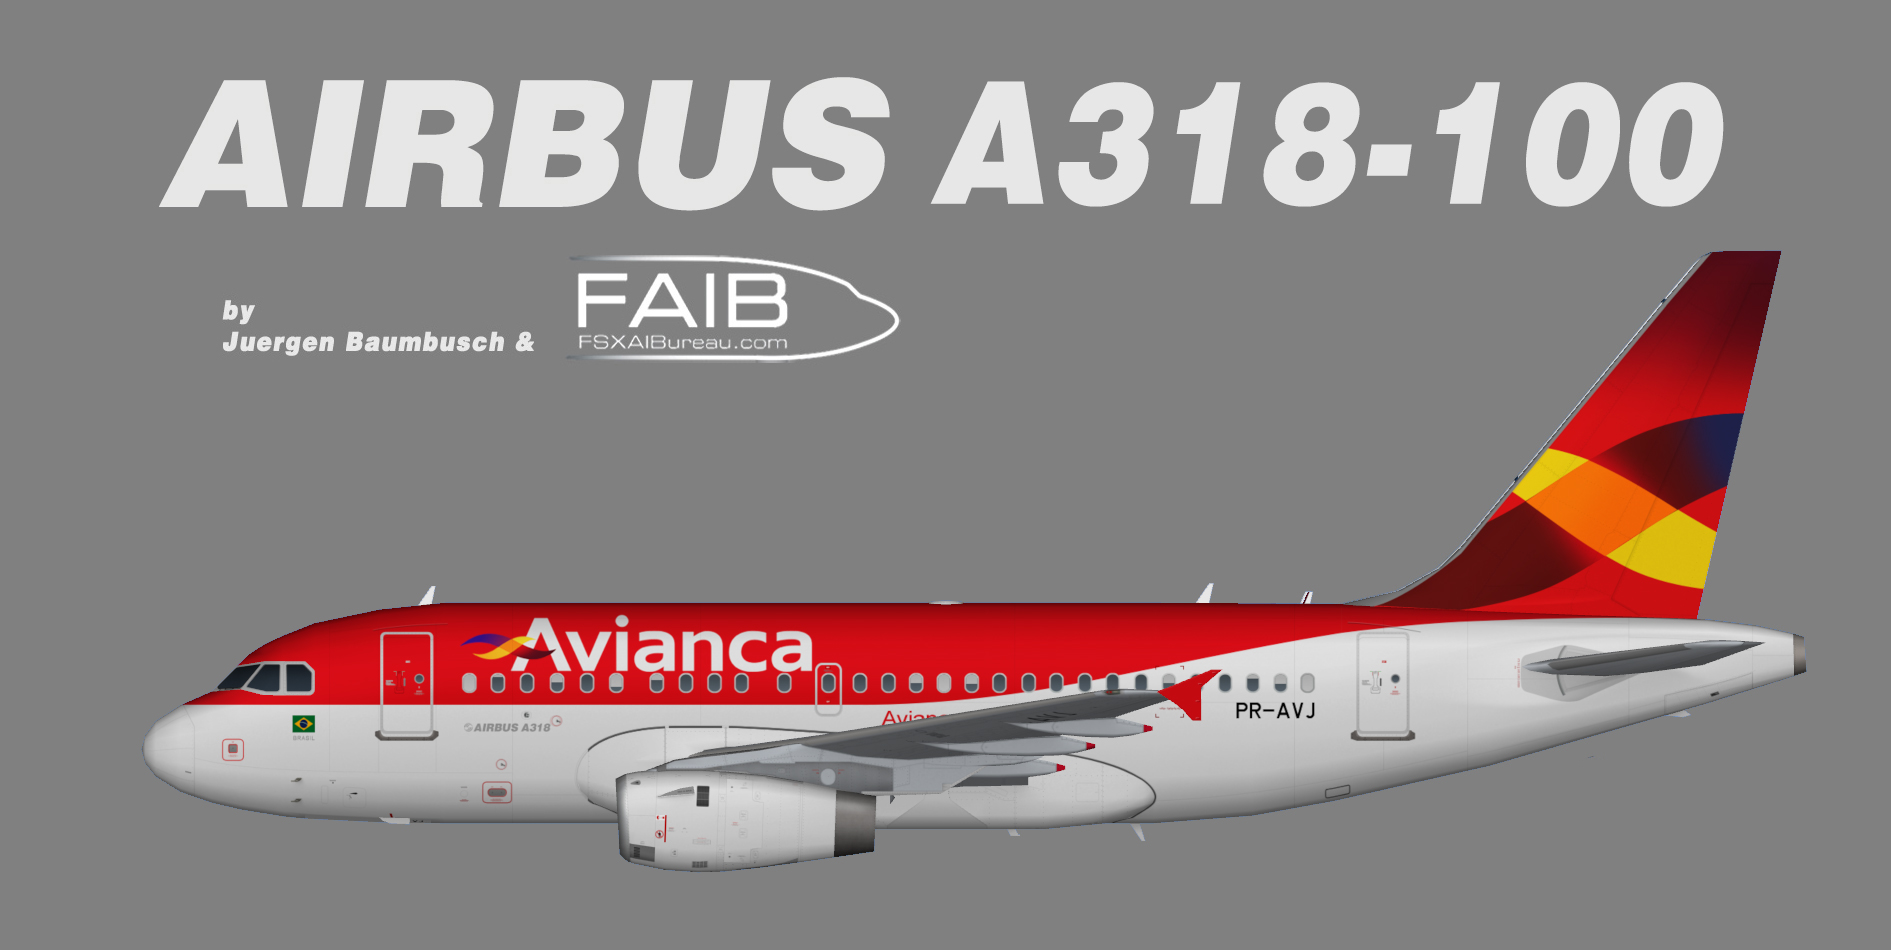 Avianca Brasil Airbus A318